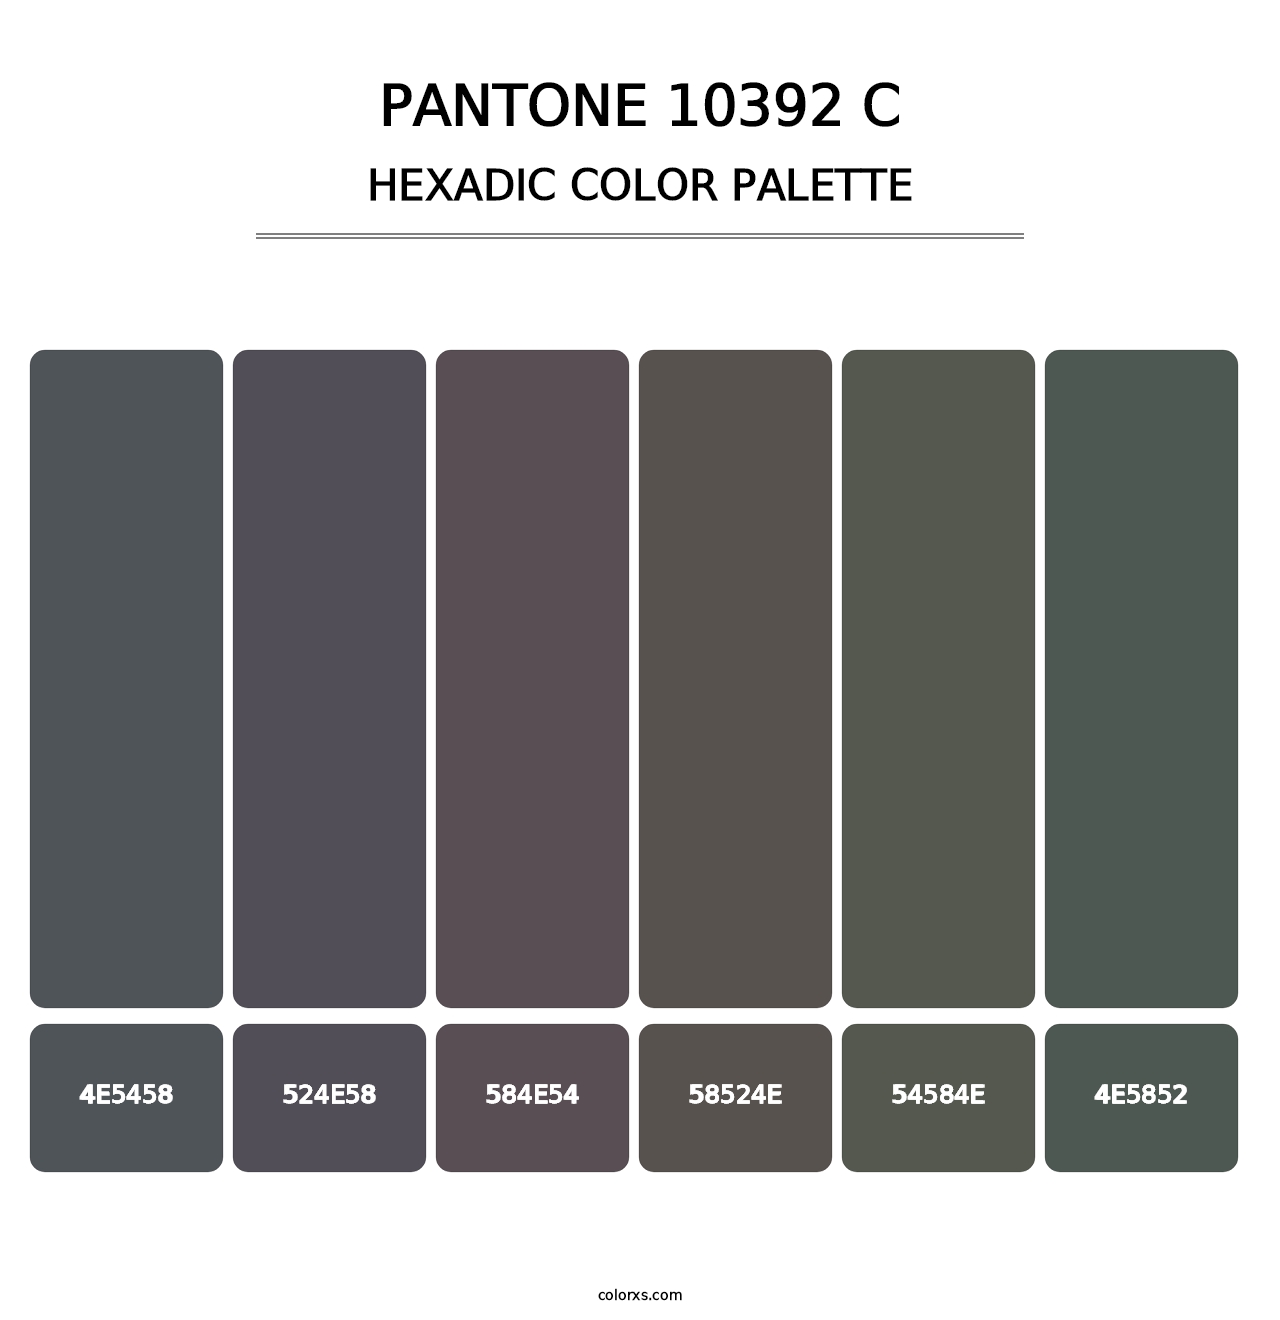 PANTONE 10392 C - Hexadic Color Palette